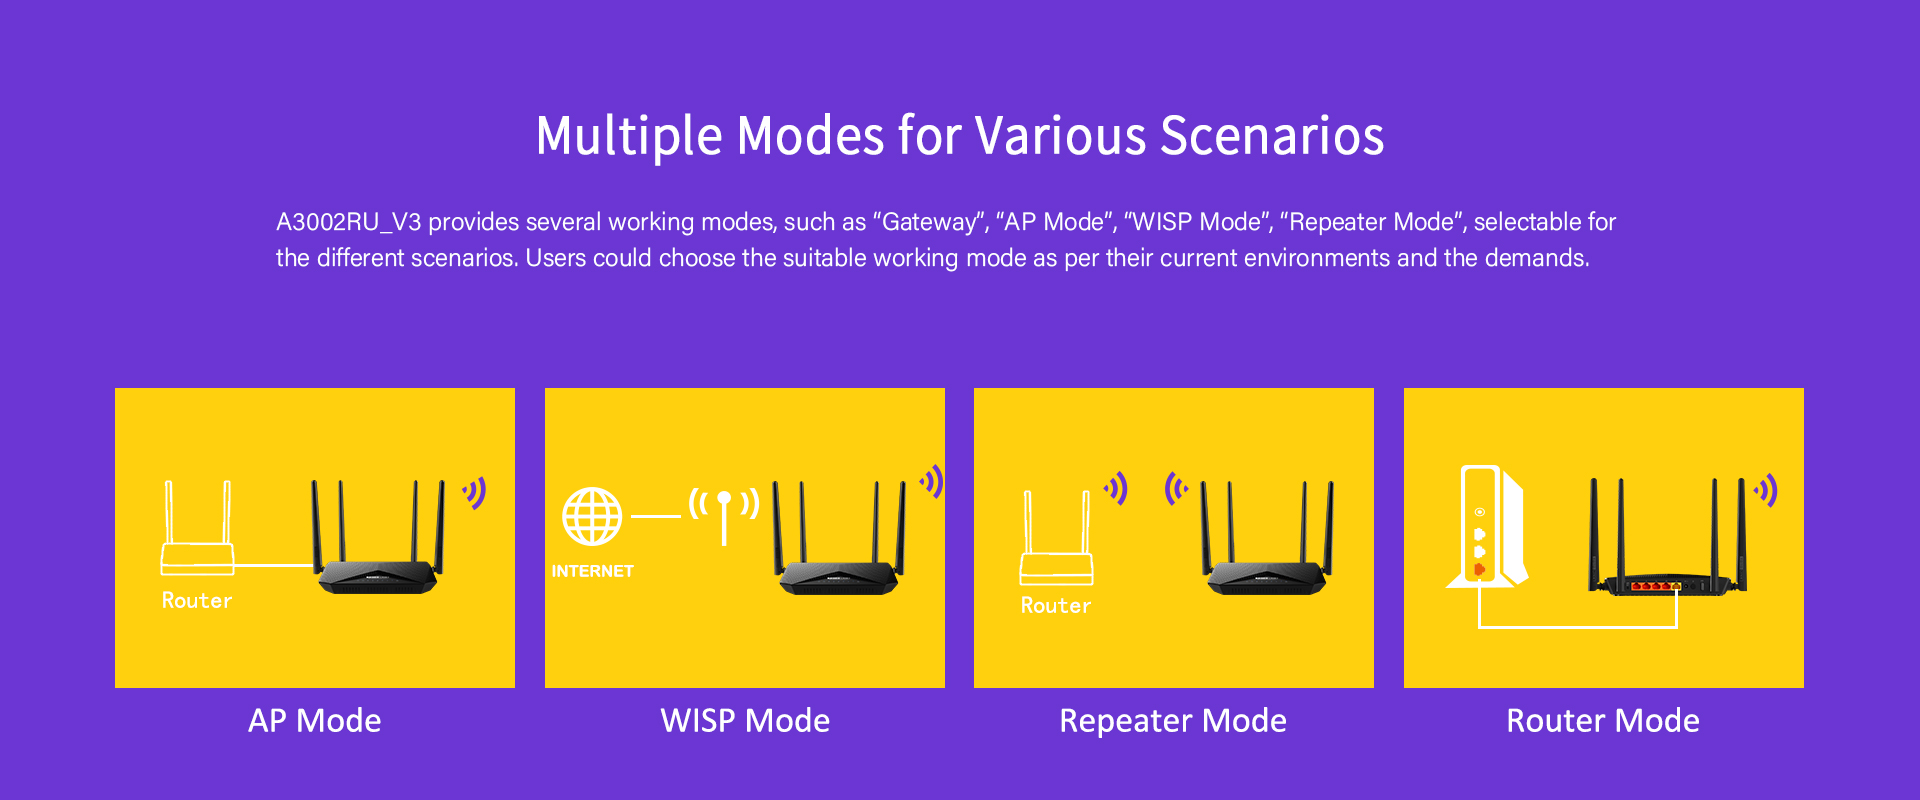 Multiple Modes for Various Scenarios 